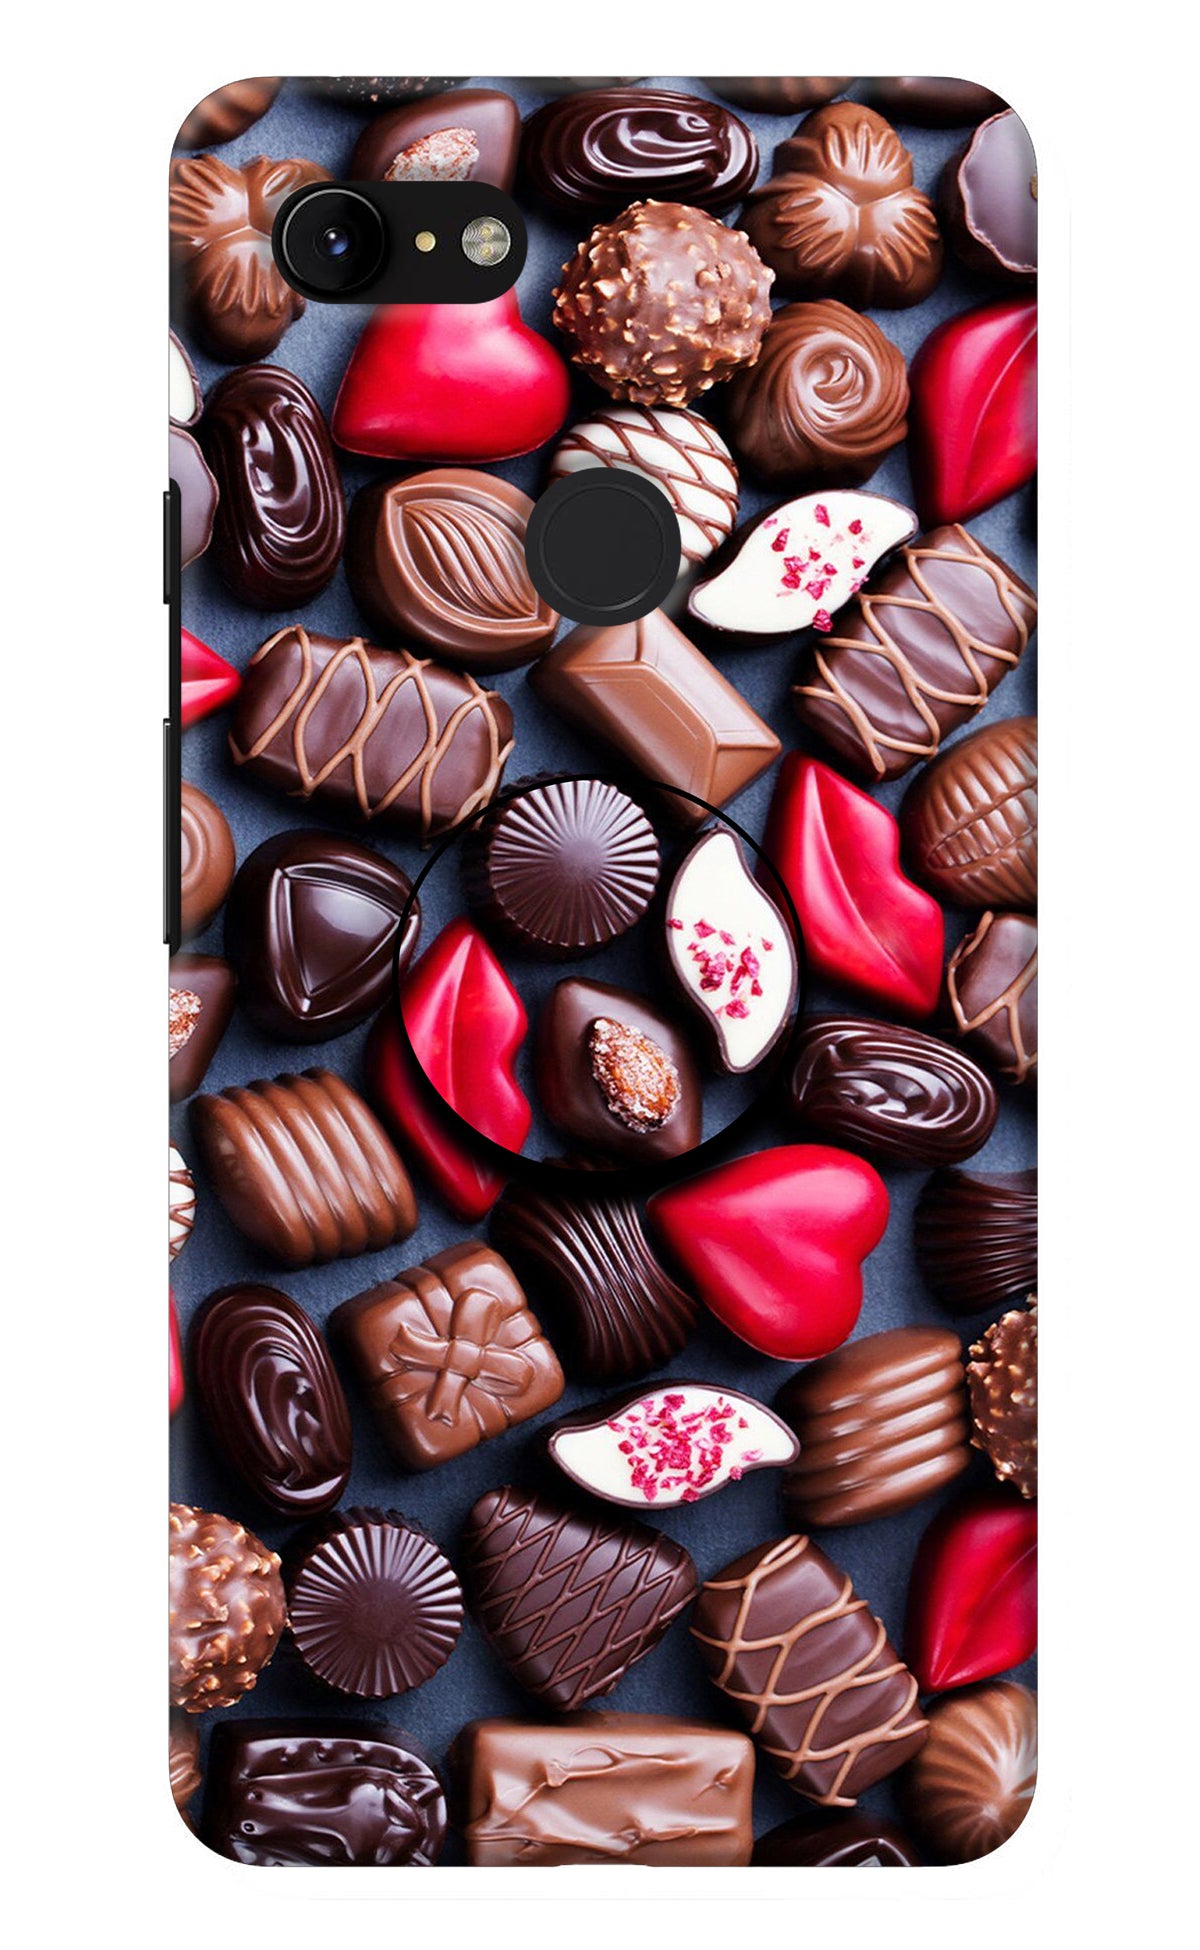 Chocolates Google Pixel 3 XL Pop Case